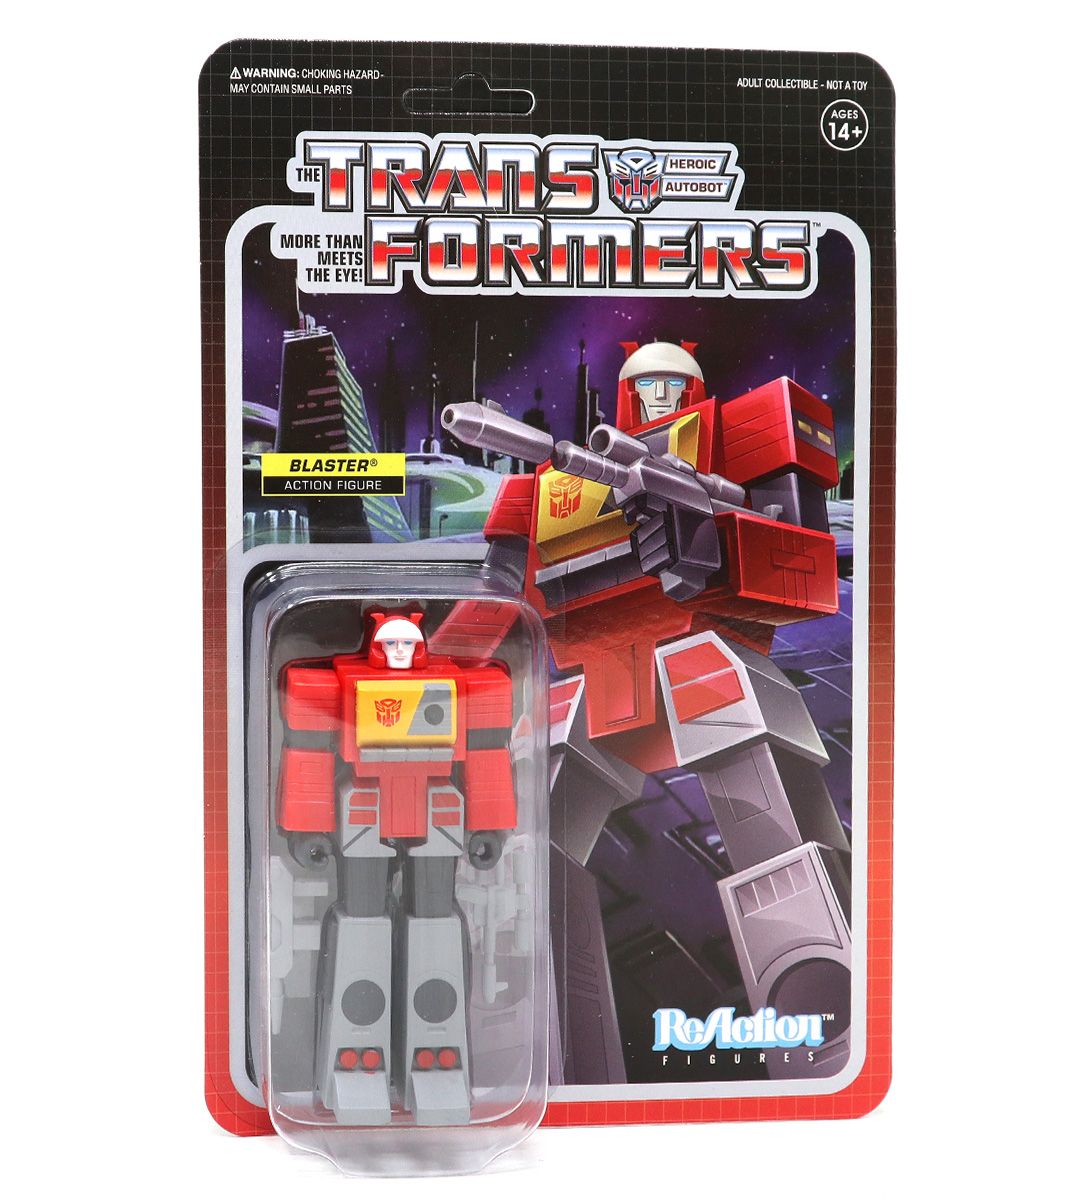 Blaster - Transformers wave 3 - ReAction figure